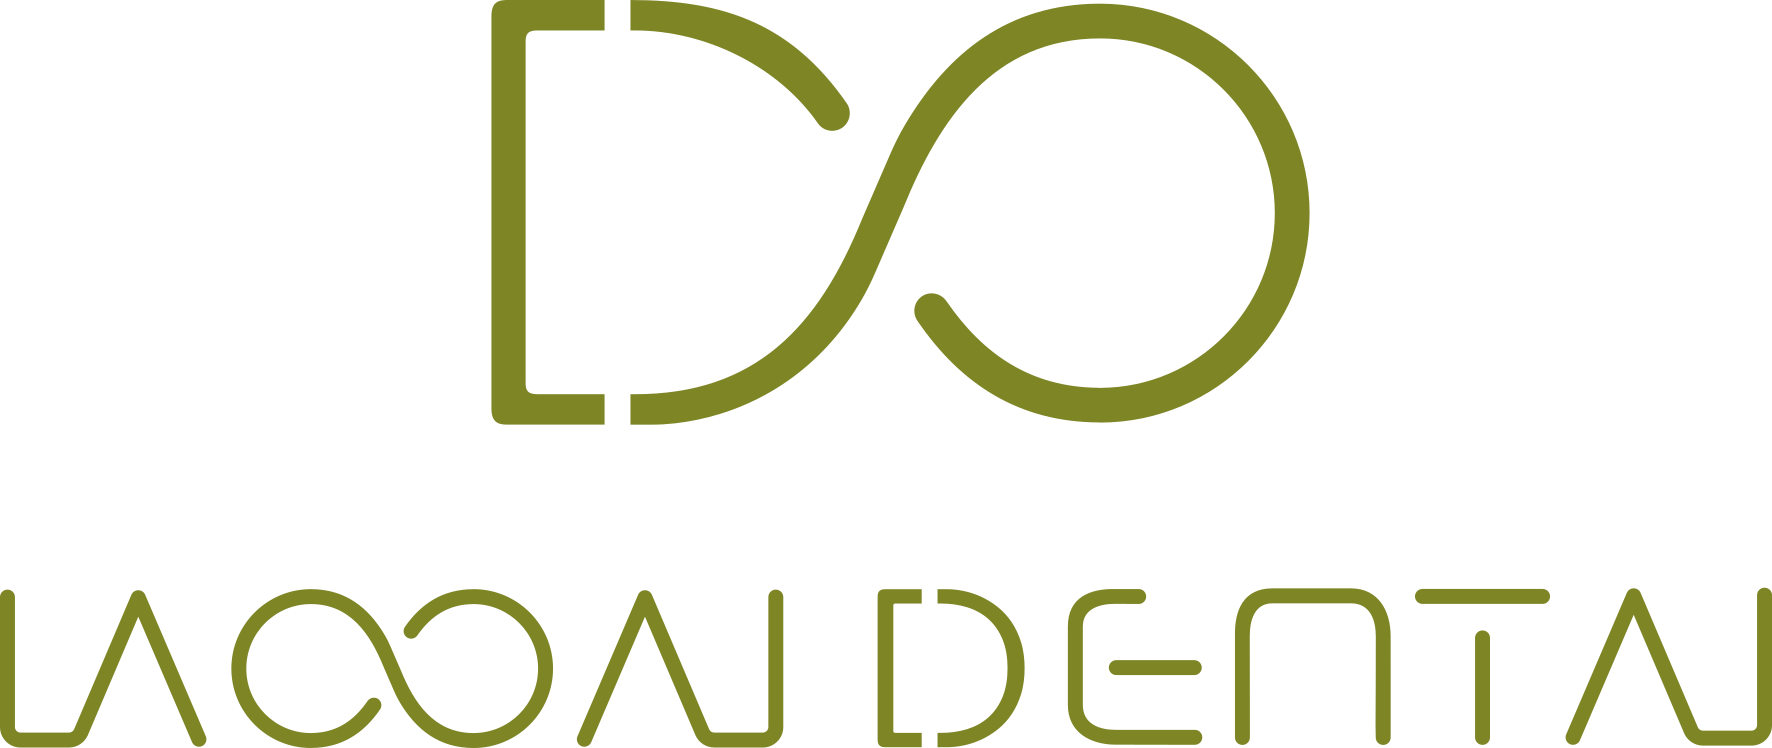 nuevo logo laooal dental